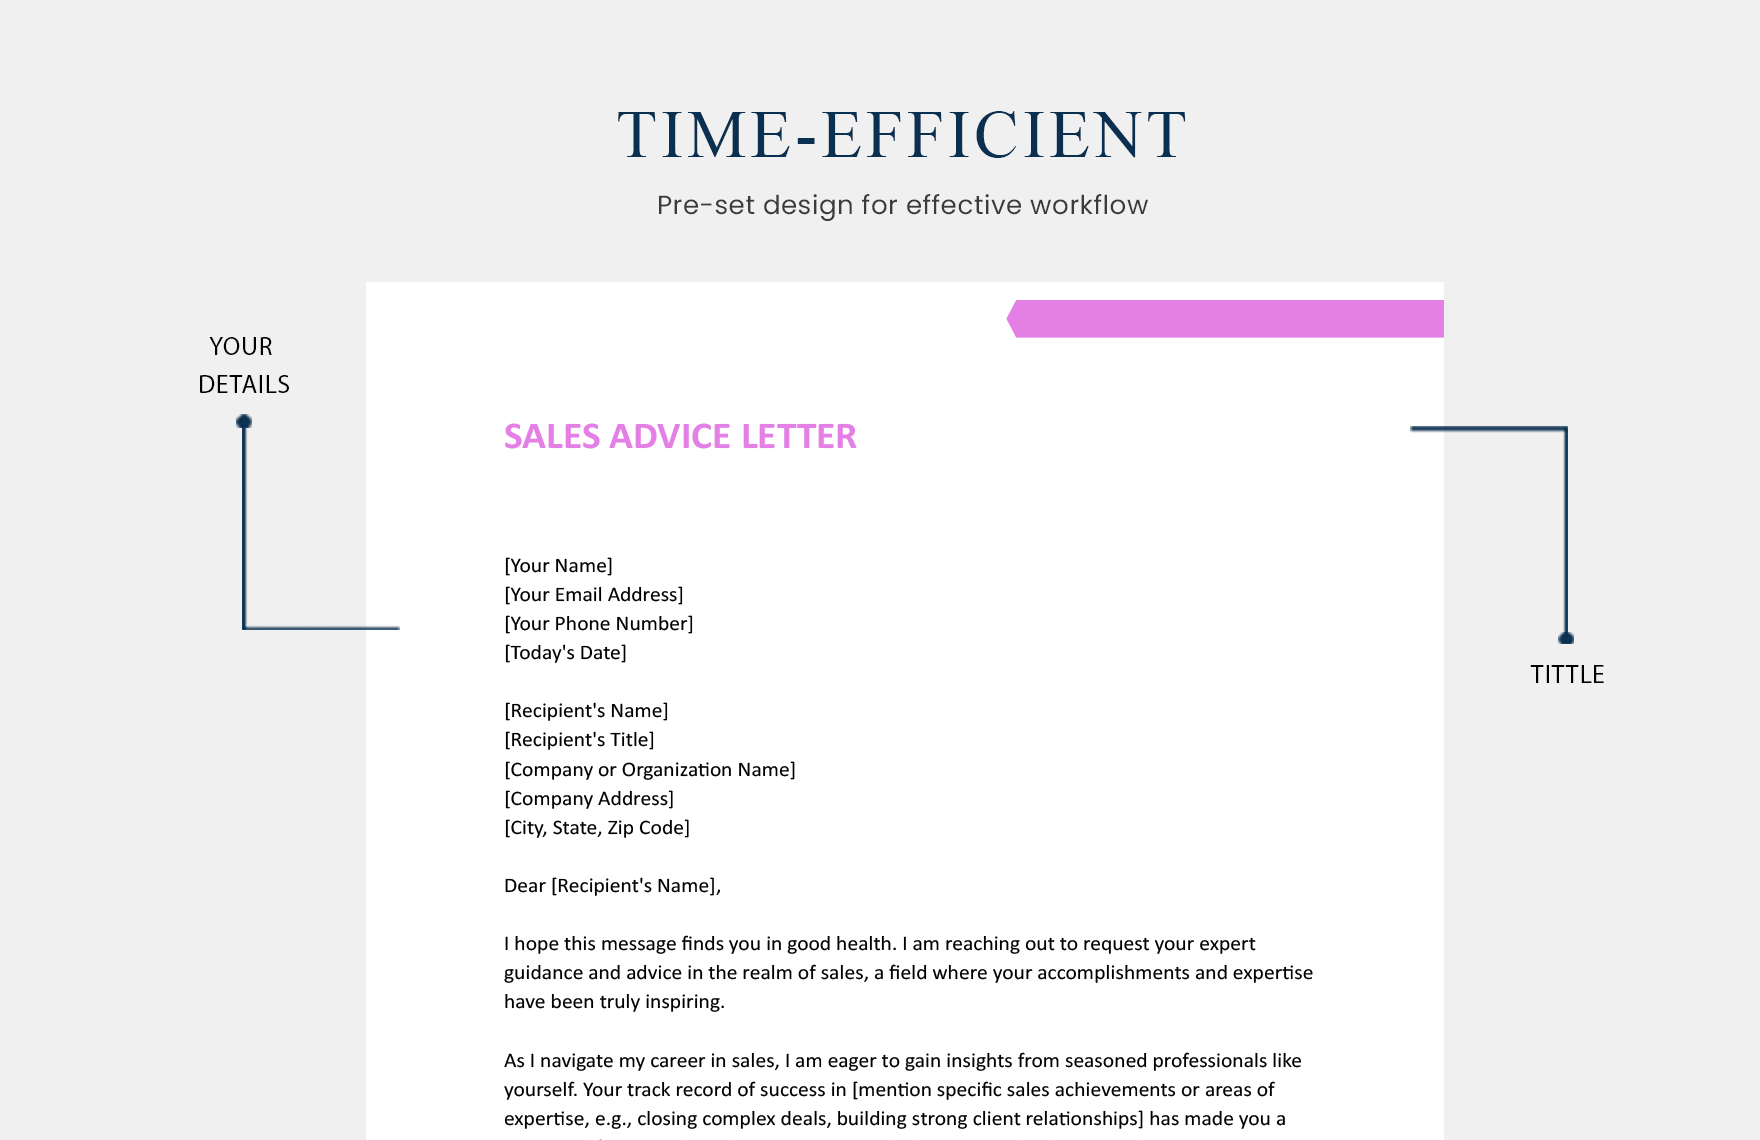 Sales Advice Letter